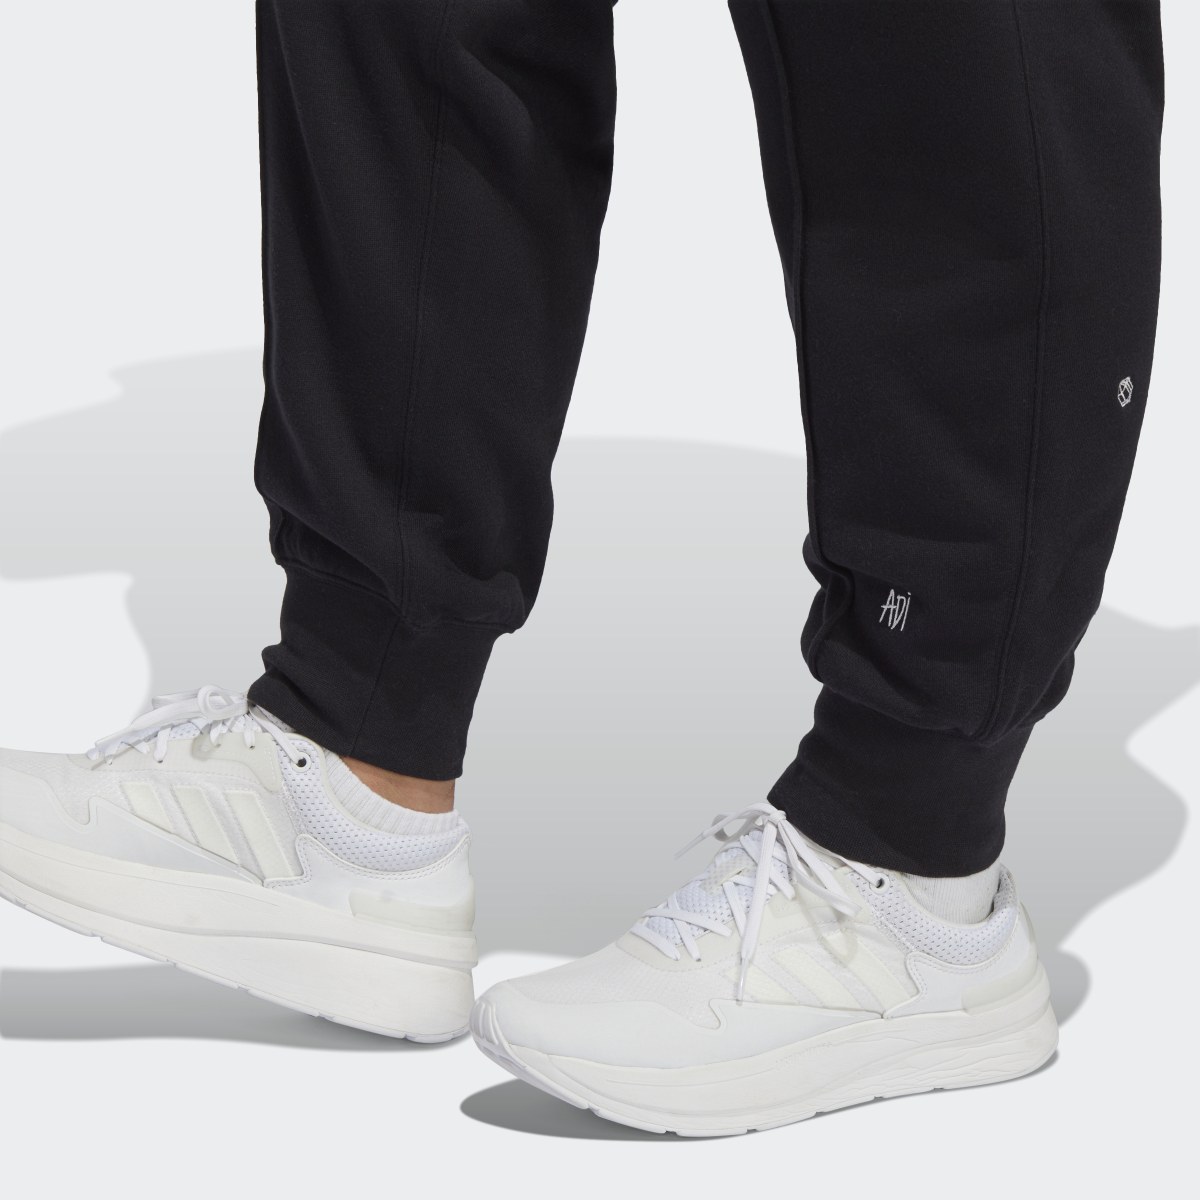 Adidas Pantaloni Joggers with Healing Crystals Inspired Graphics (Curvy). 6